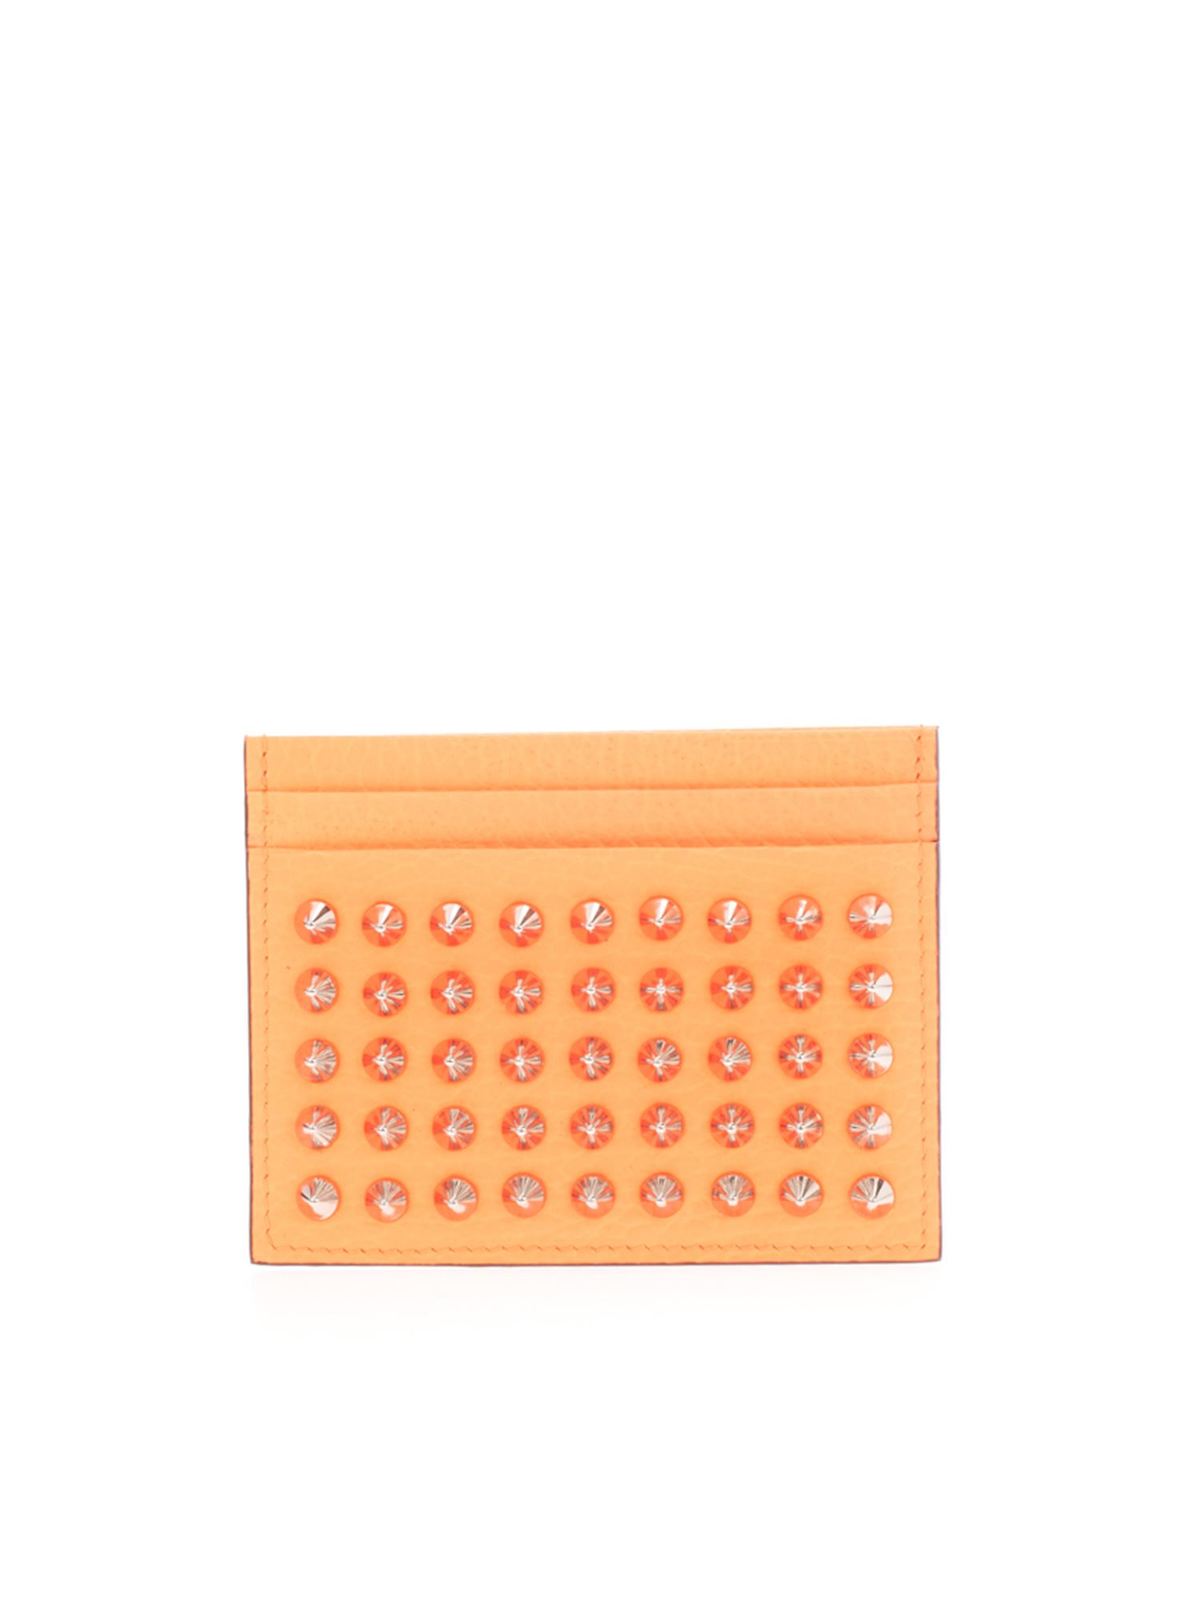 Christian Louboutin Leather Bifold Wallet - Orange Wallets